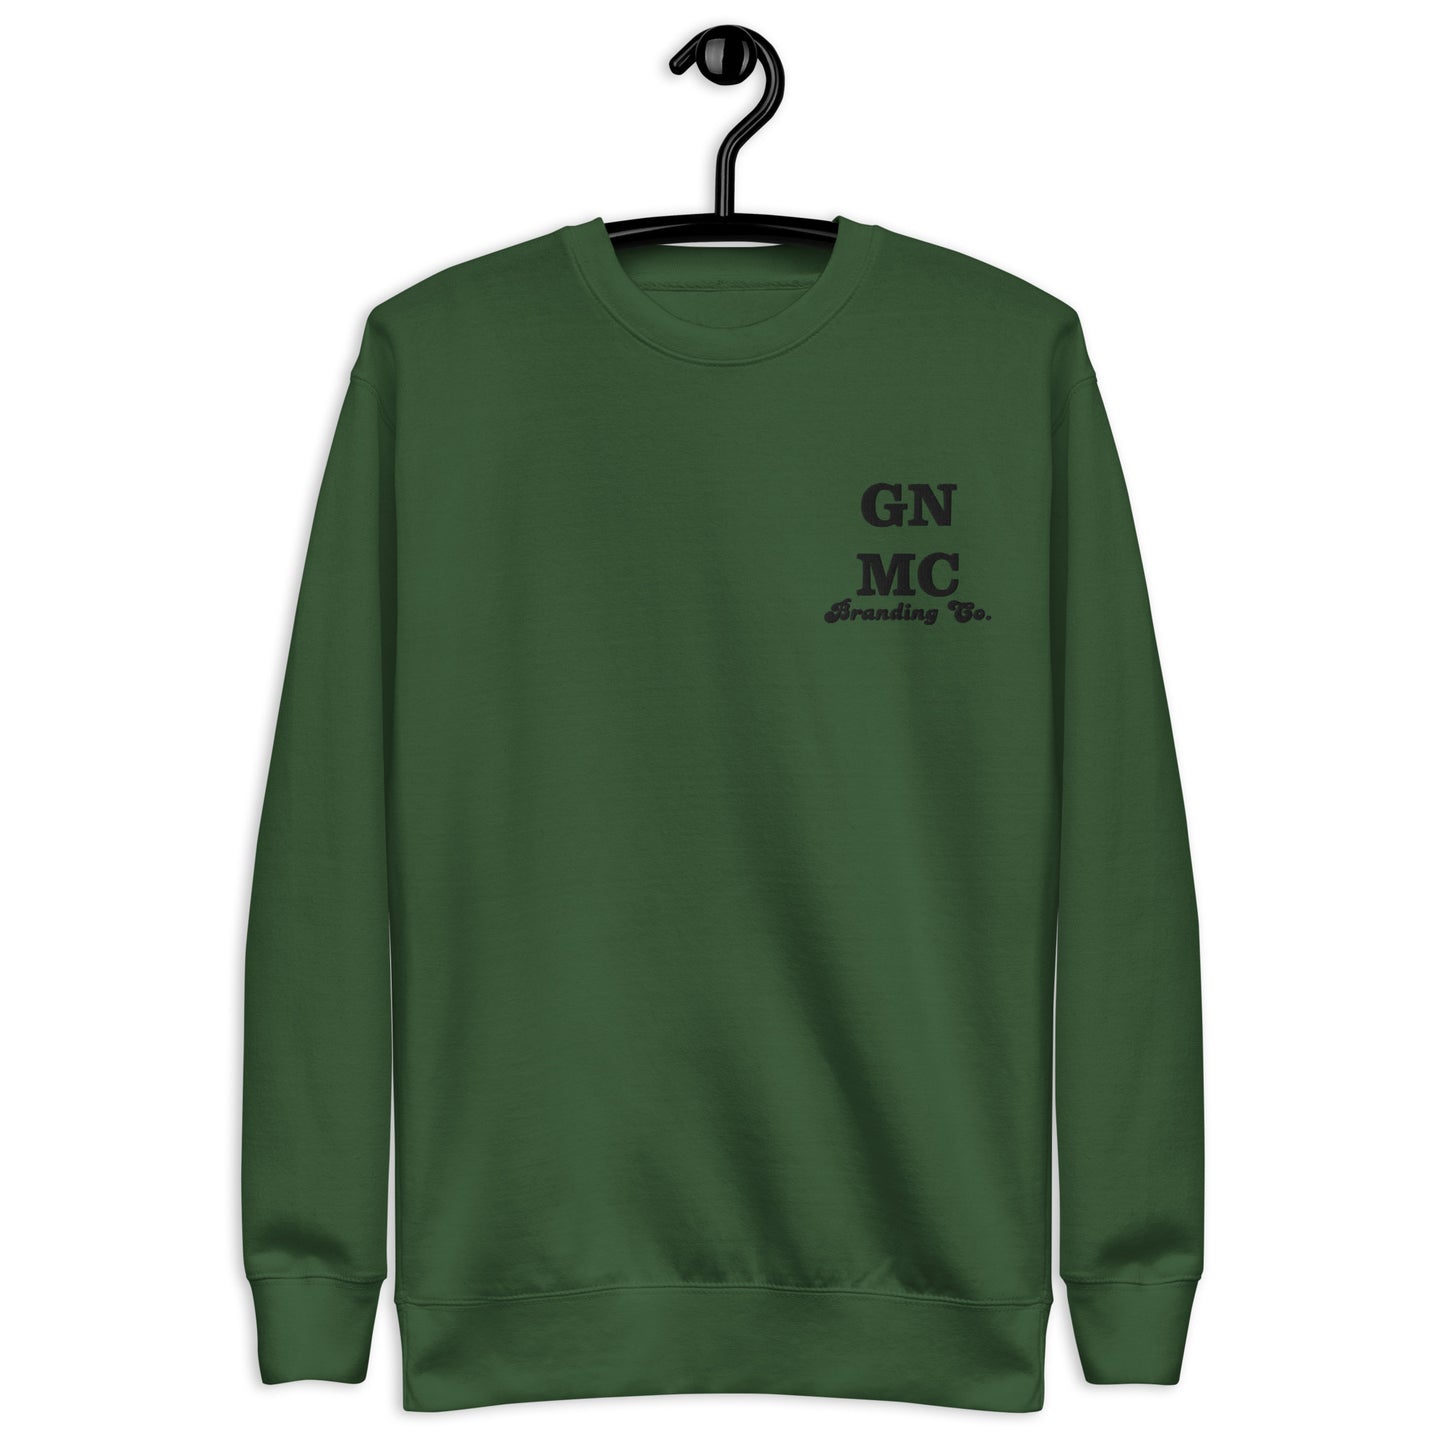 GNMC Branding Co. Unisex Premium Sweatshirt